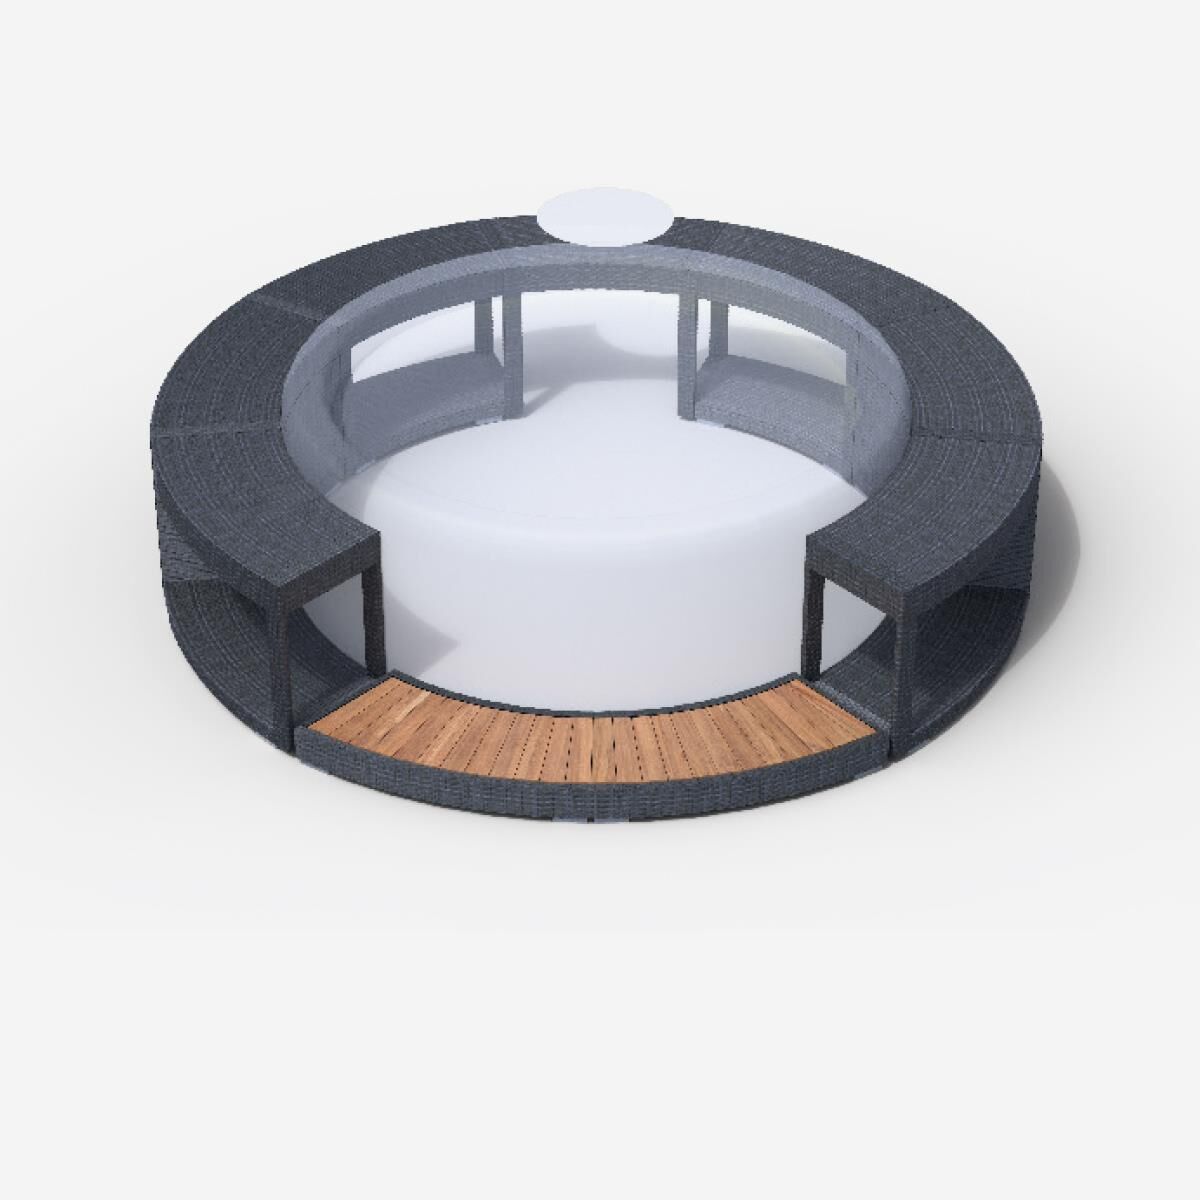 Whirlpool-Vollumrandung für Softub RESORT / POSEIDON - Polyrattan - ø 290 cm - graphite